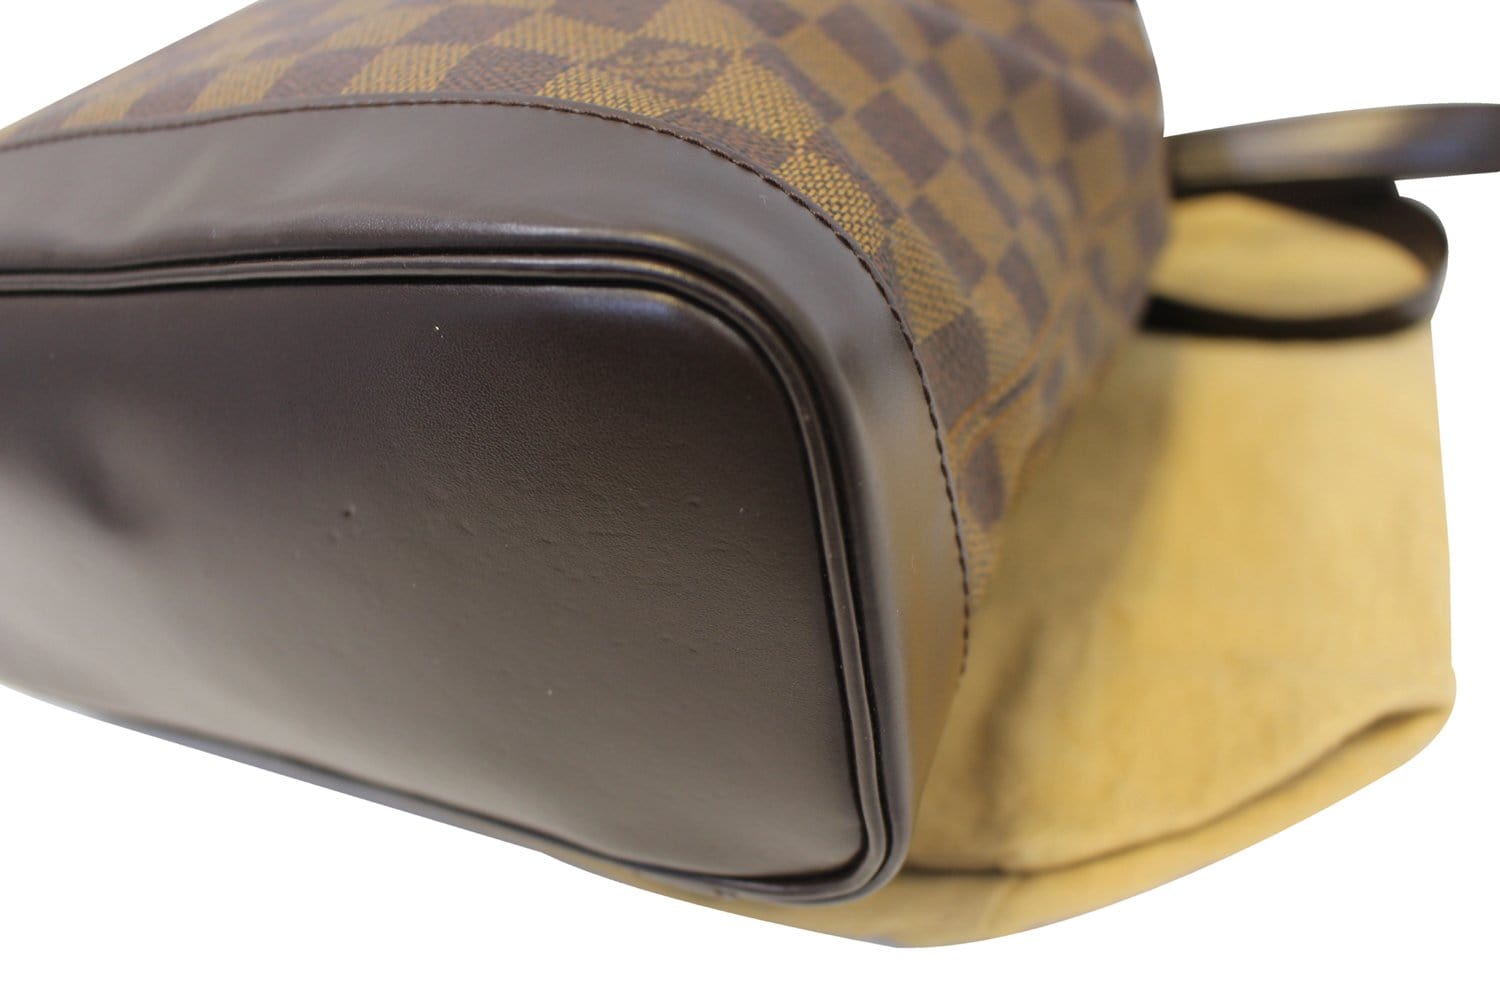 Vintage Louis Vuitton Soho Backpack in Damier Ebene (limited